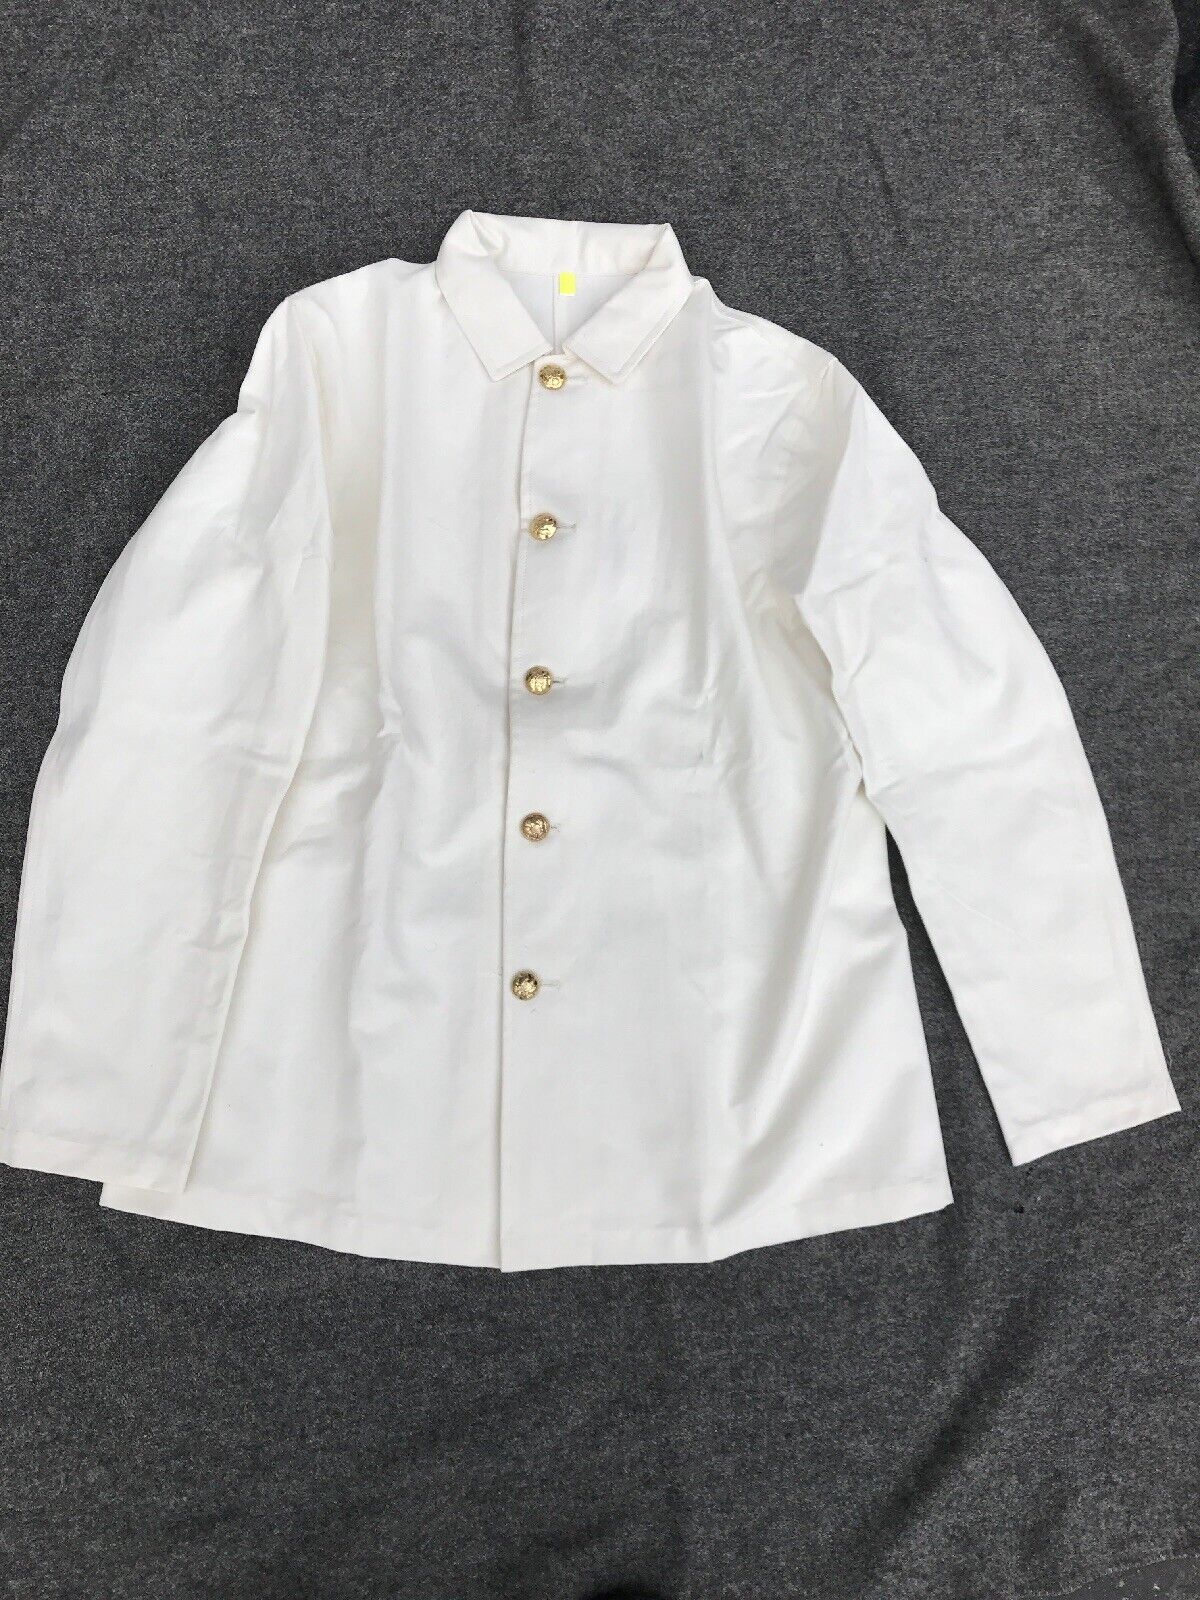 Reproduction M1889 White Duck Blouse Jacket Size 38